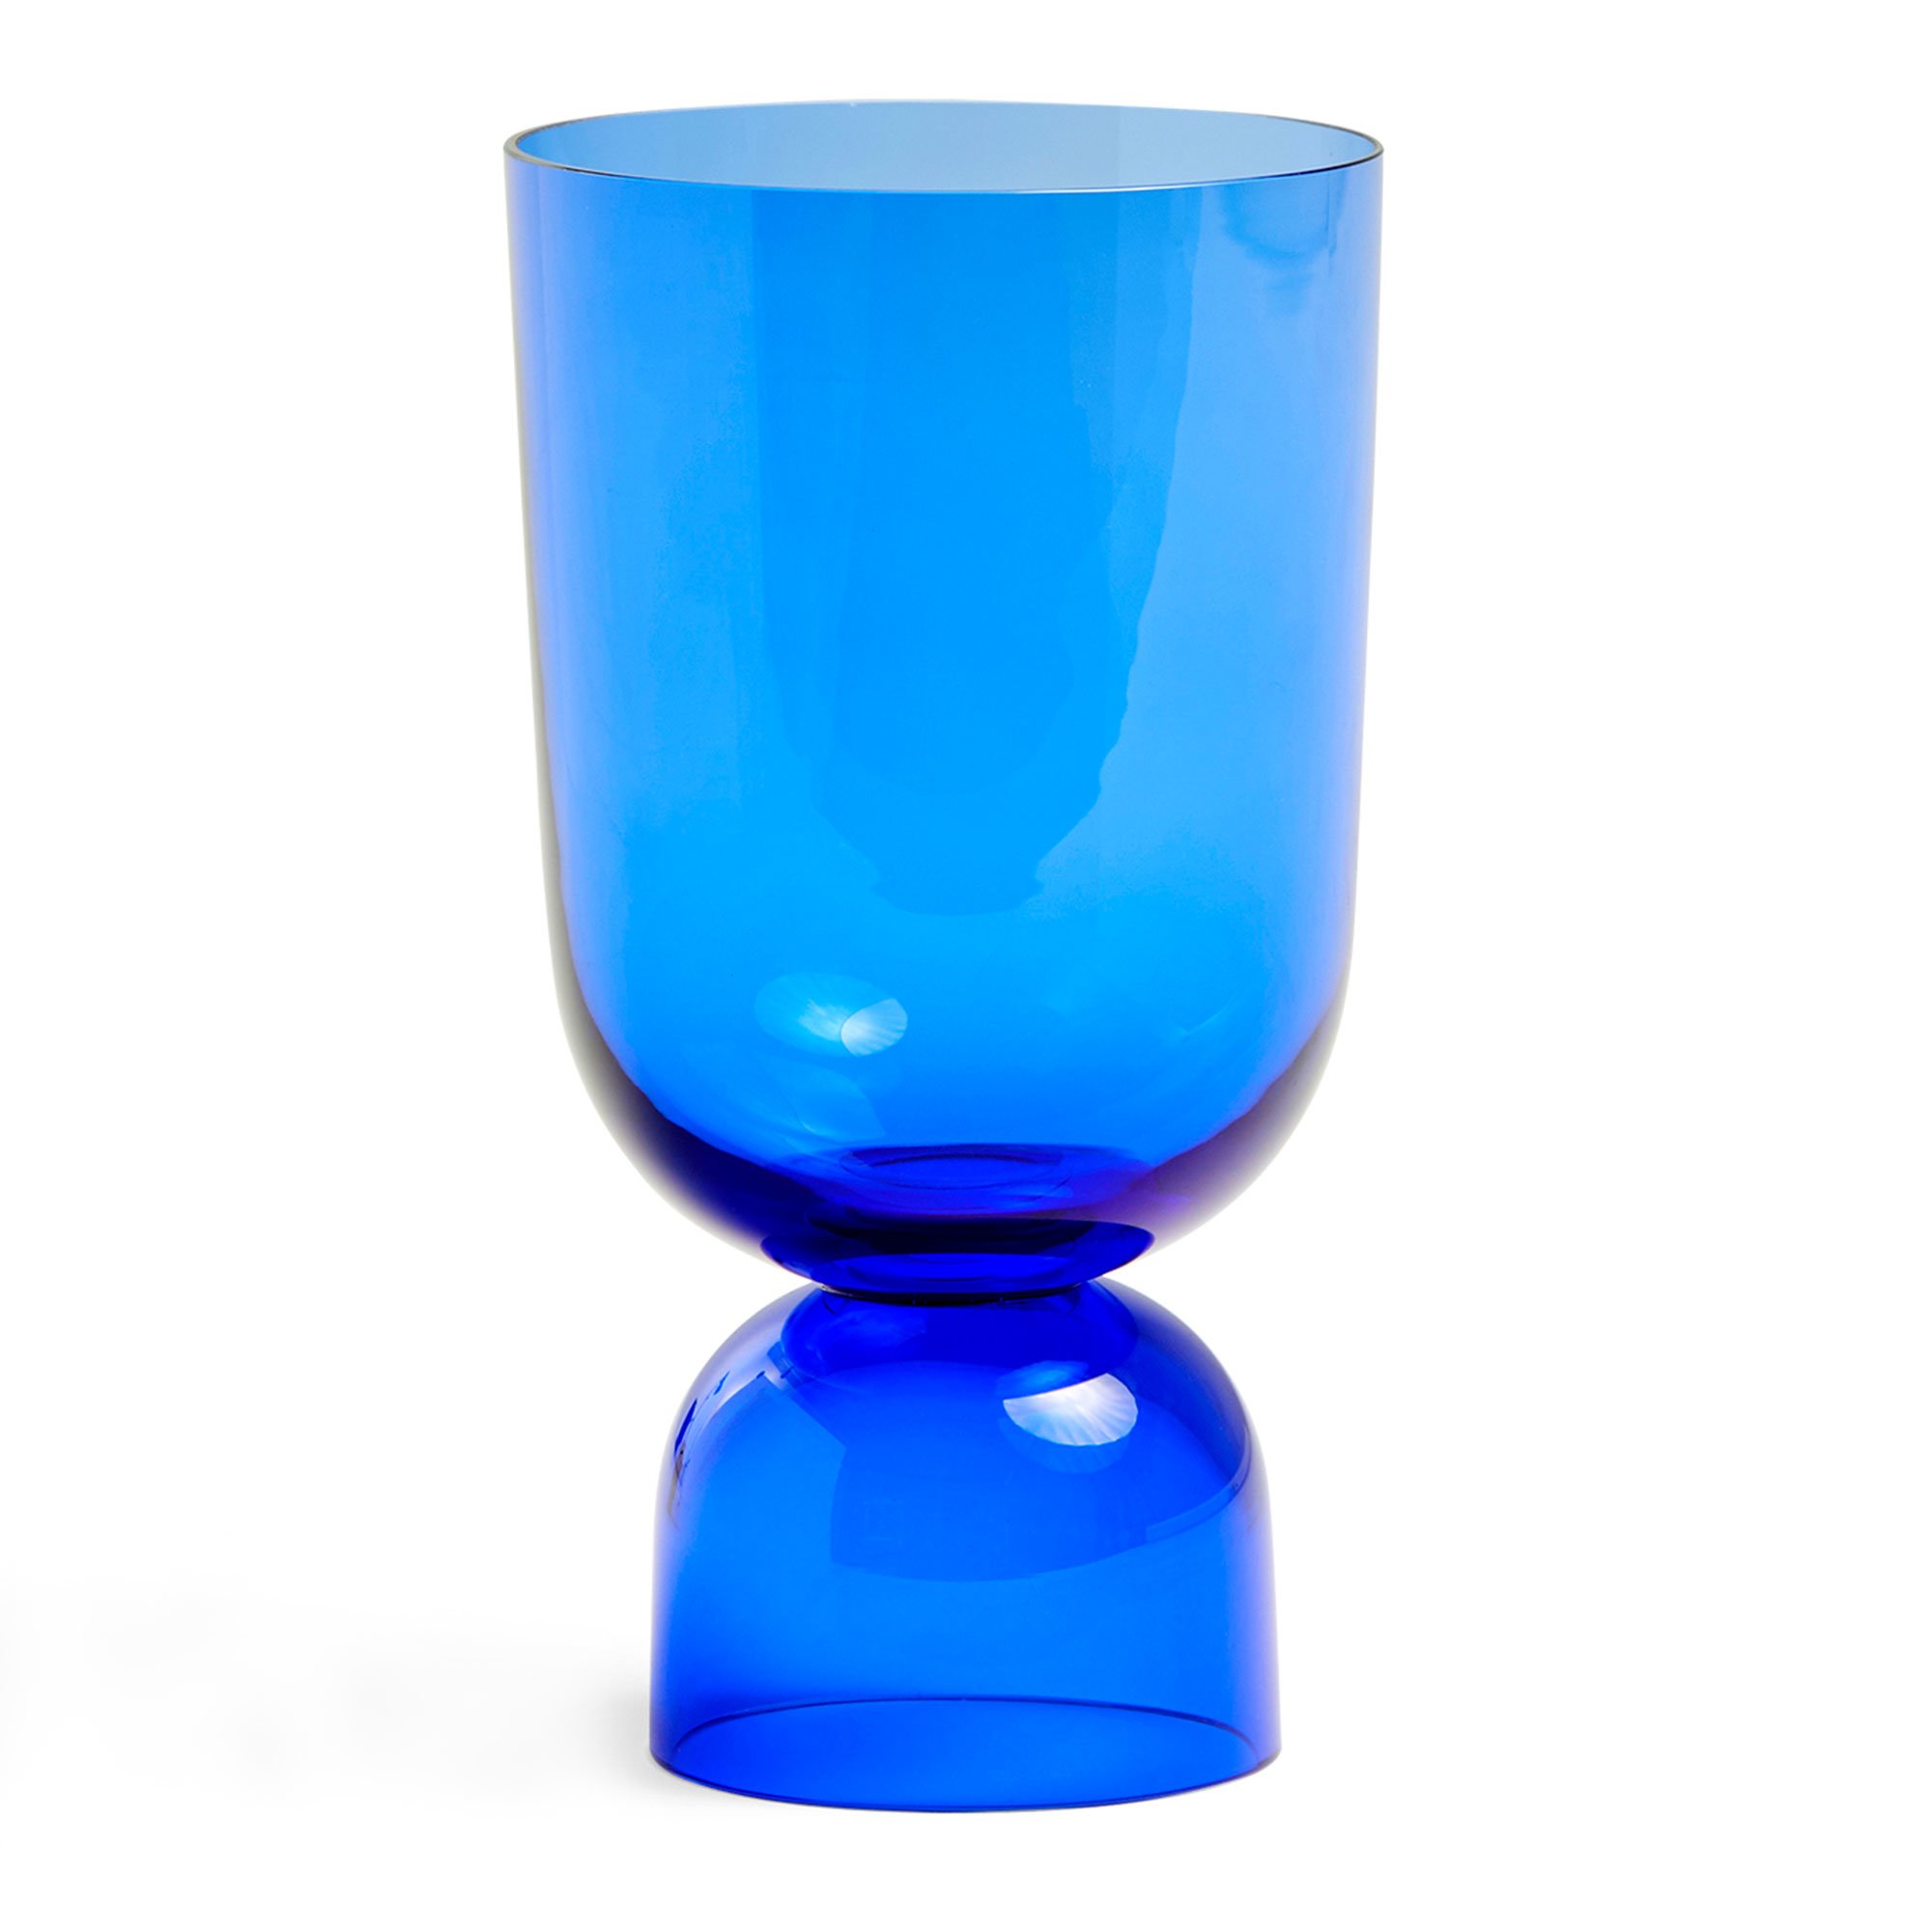 5: HAY Bottoms Up vase, electric blue